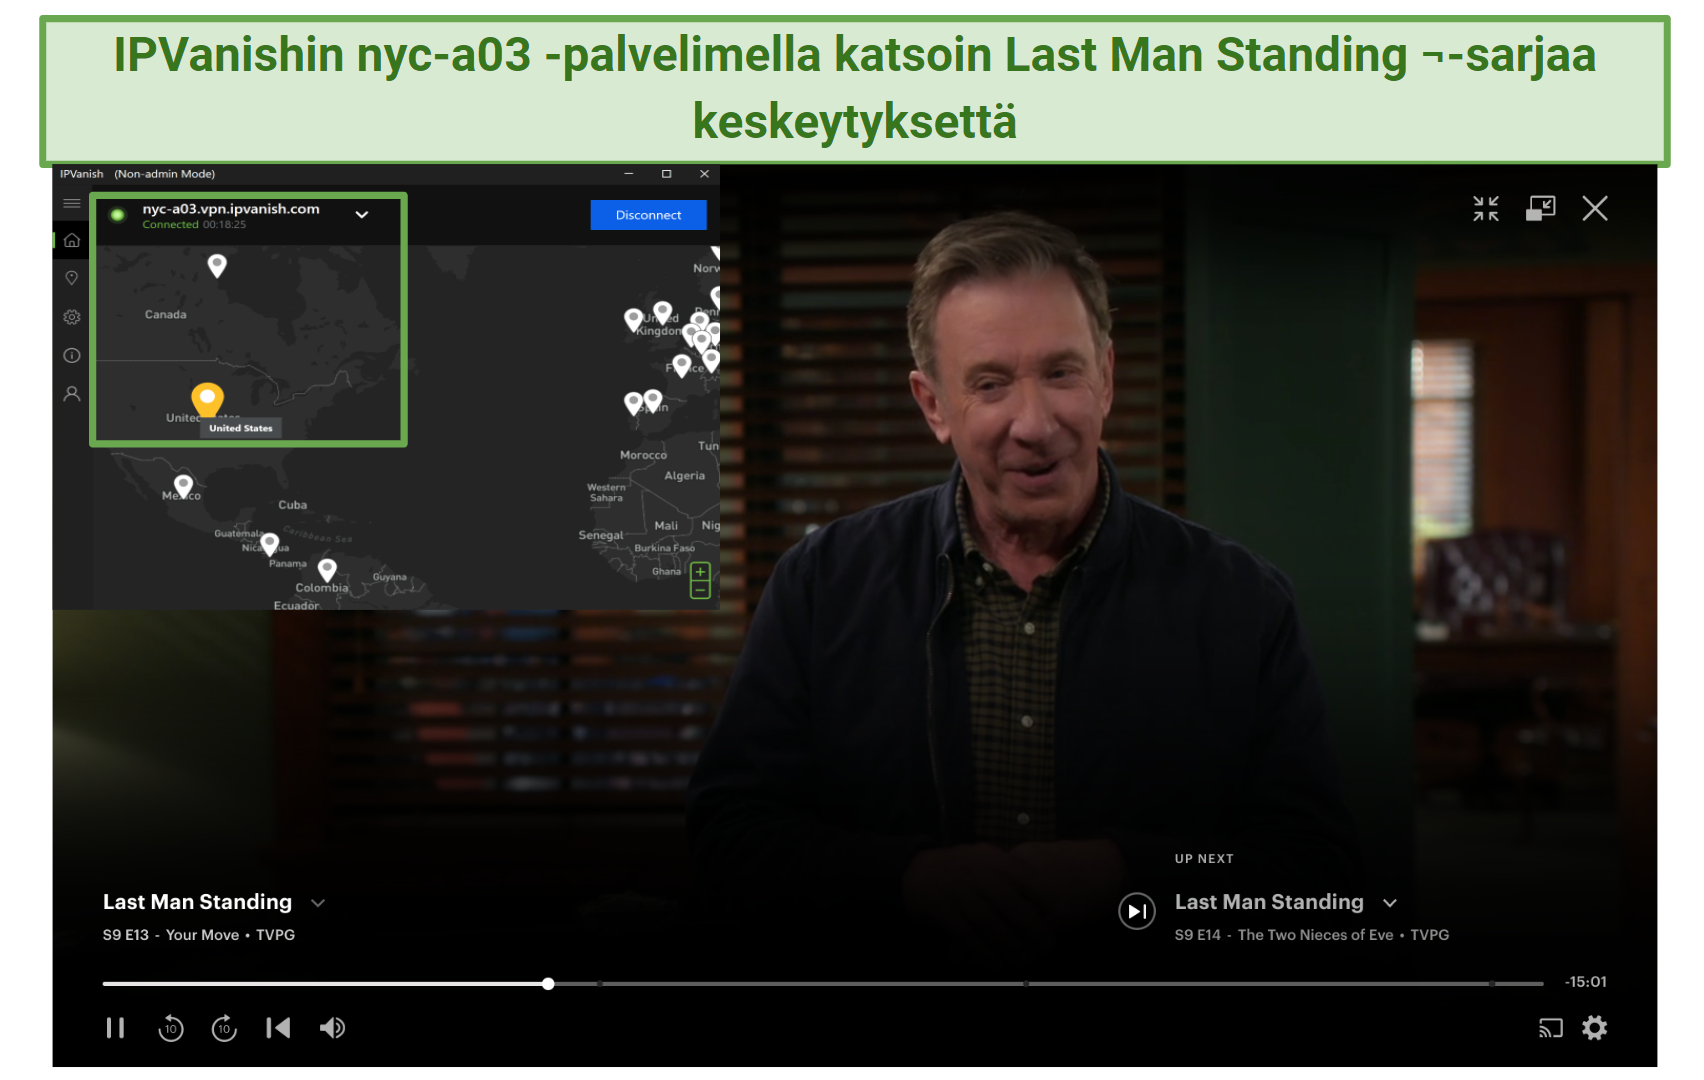 IPVanish's New York server unblocking Last Man Standing on Hulu